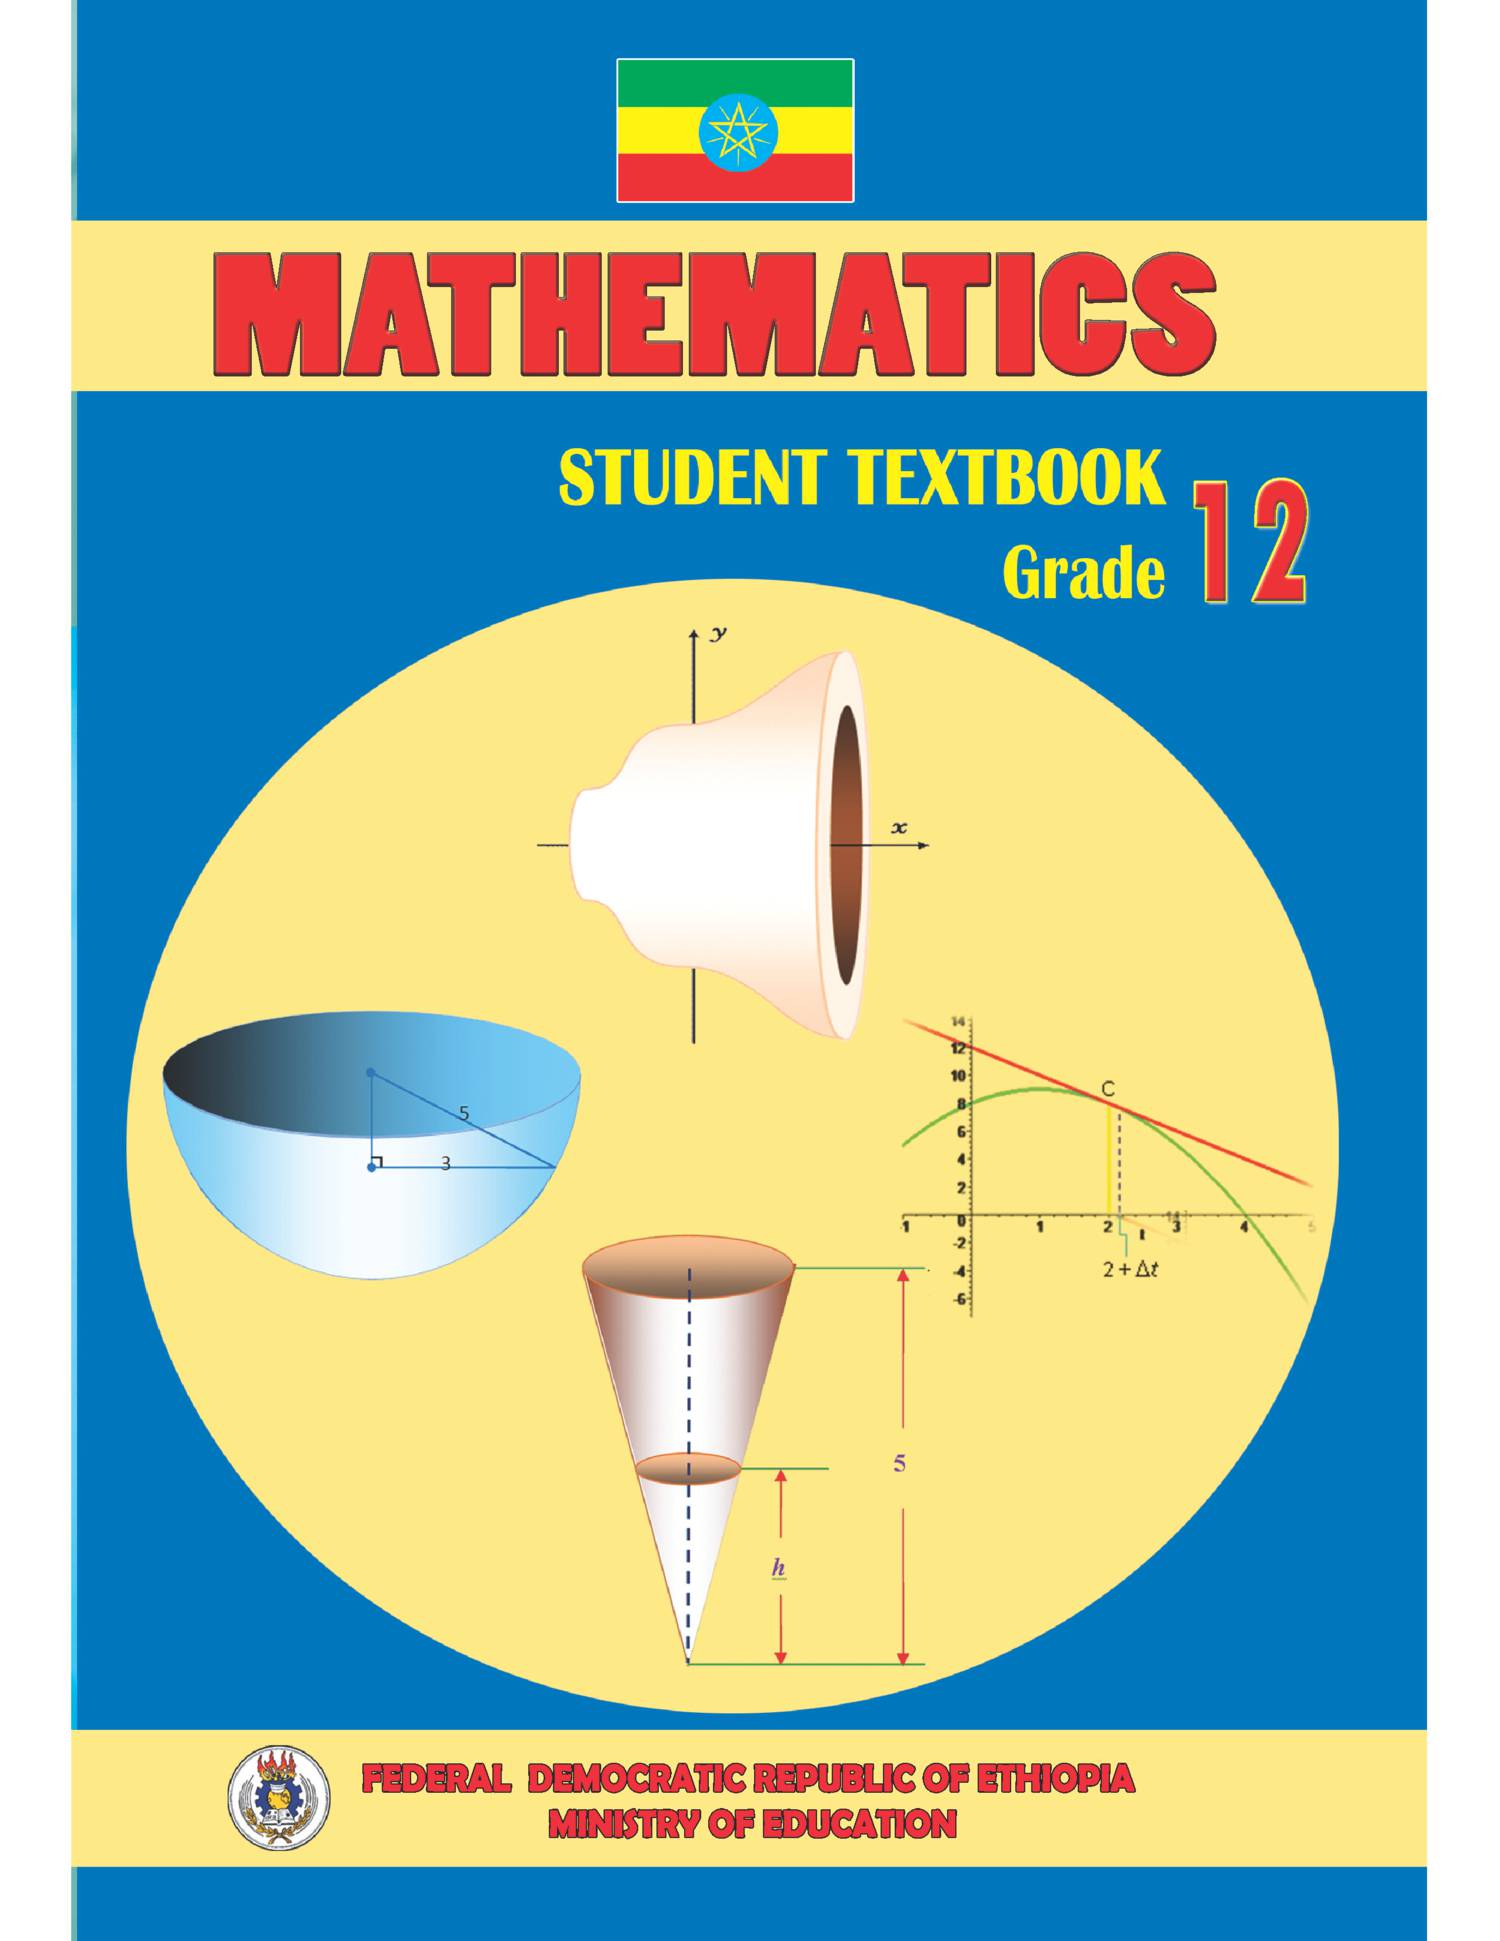 12th maths pdf download